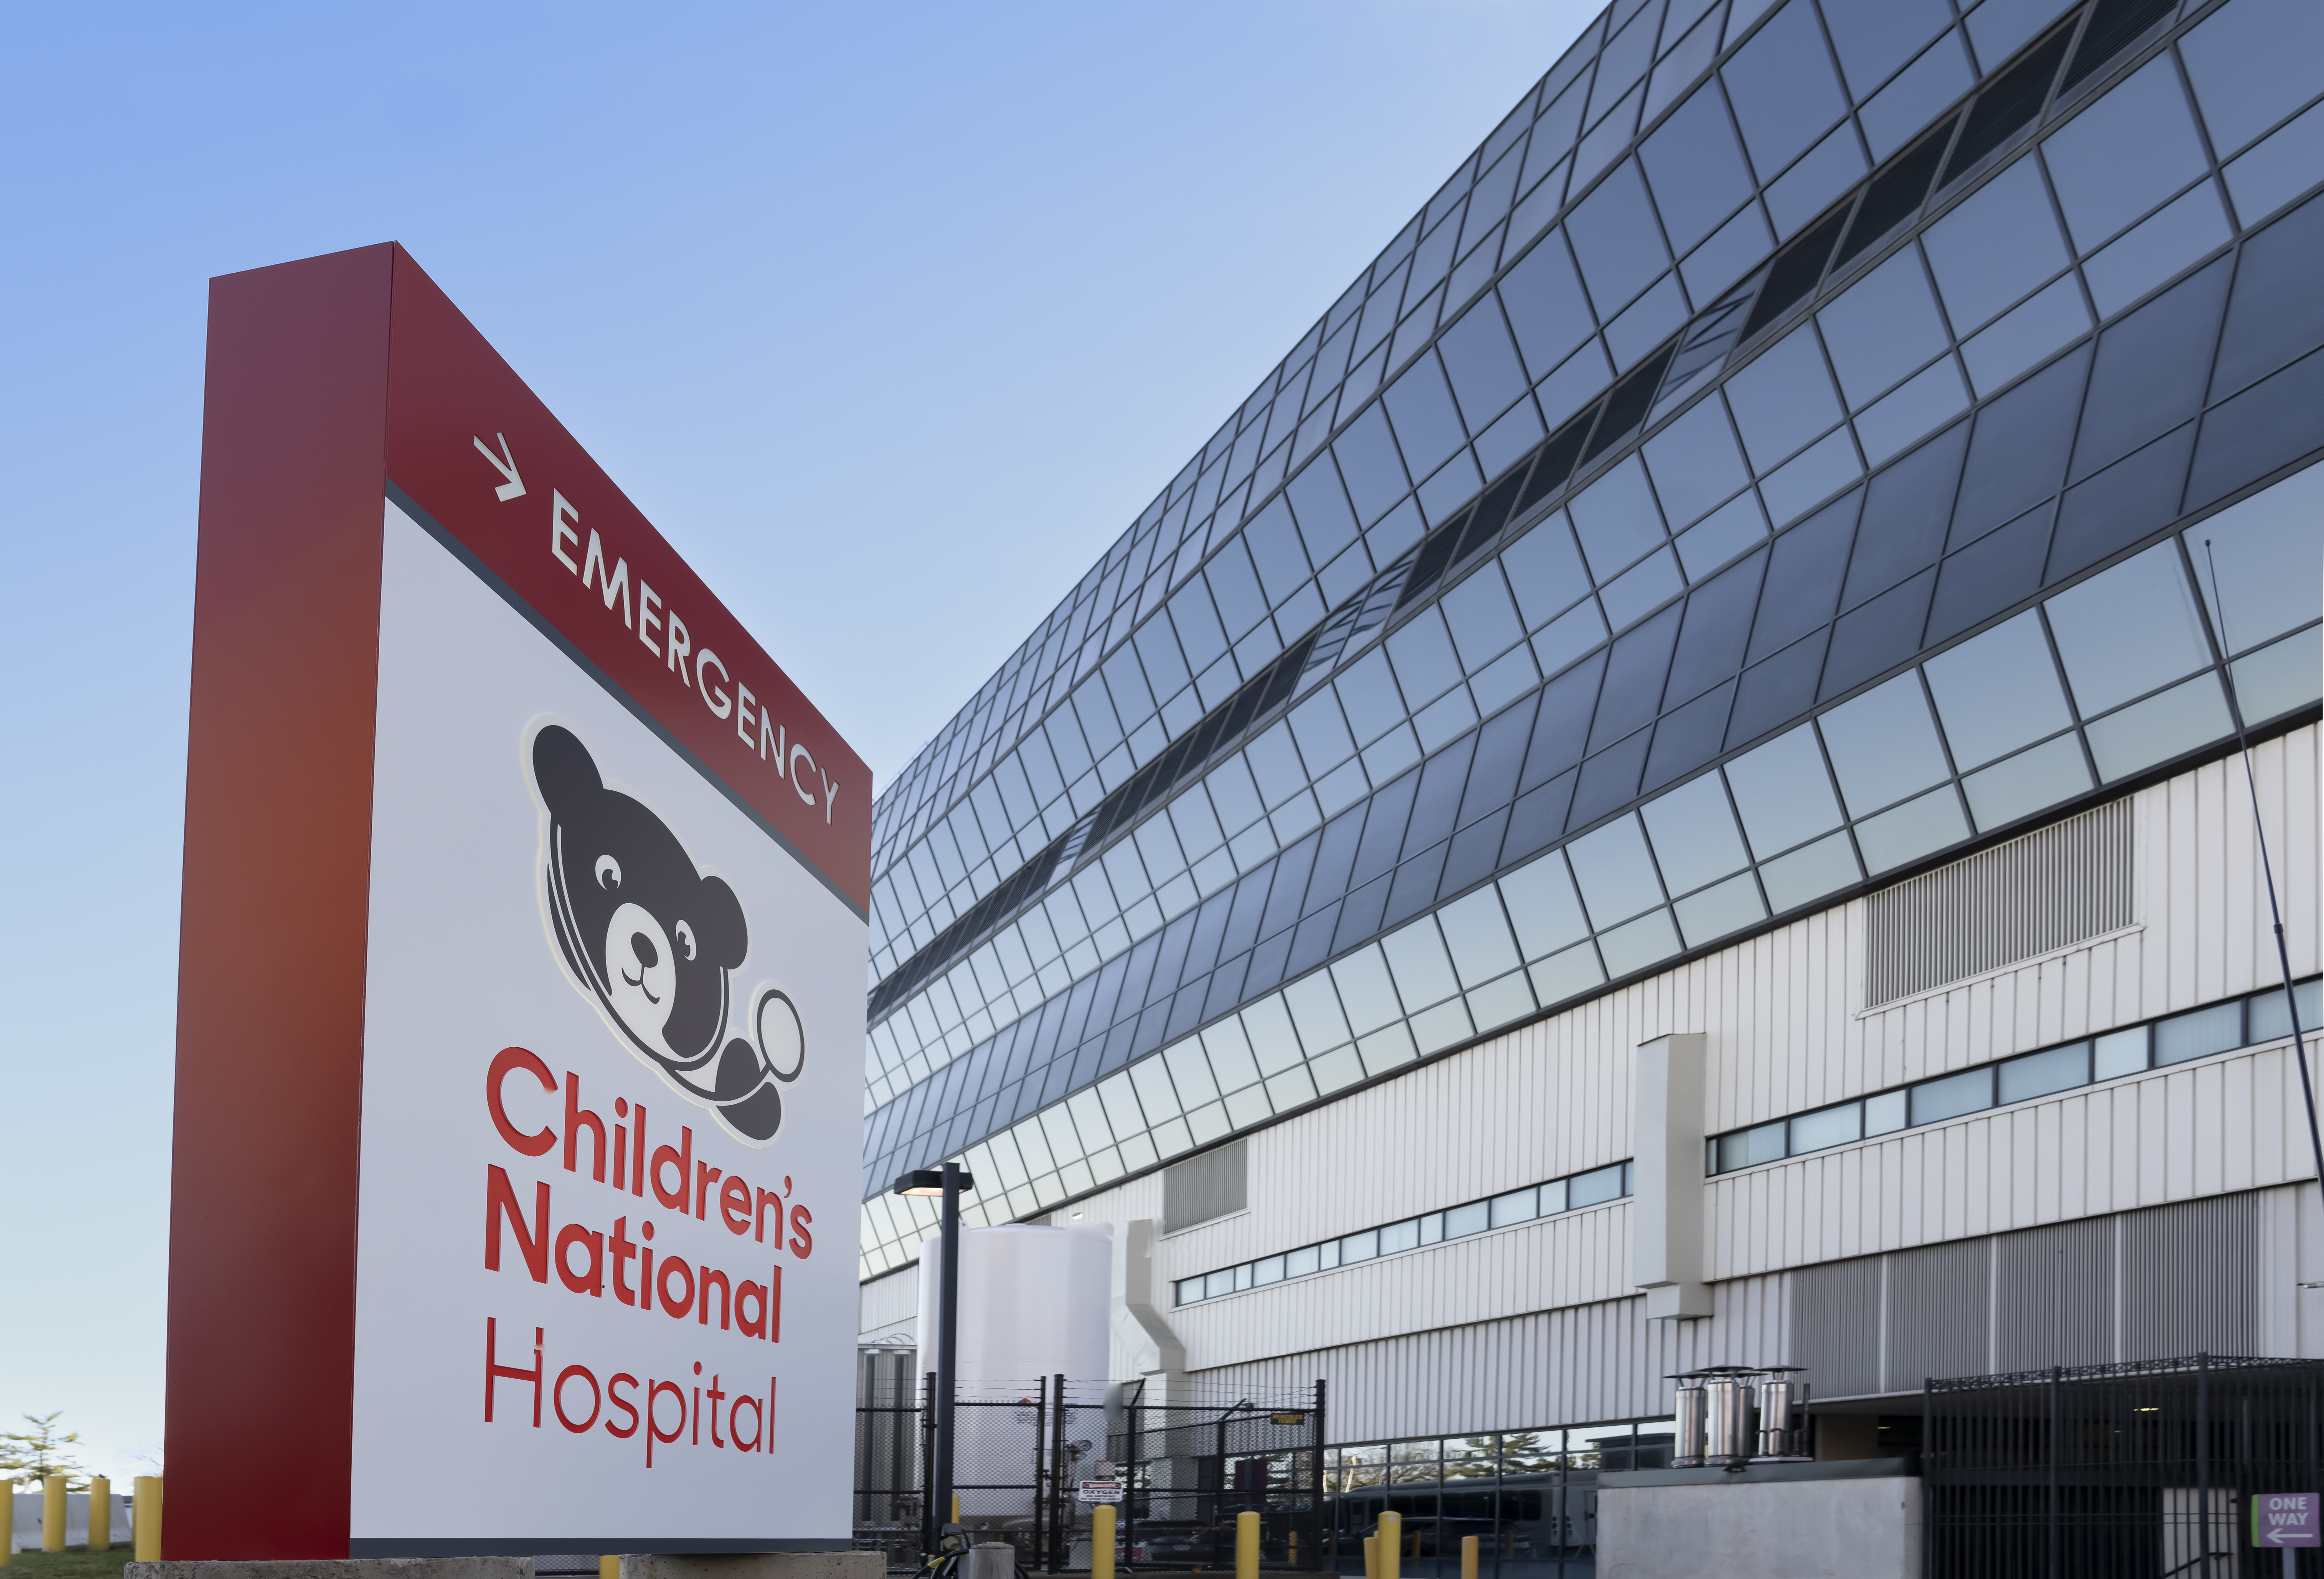 Entrance sign in front of Children's National Hospital Emergency Department